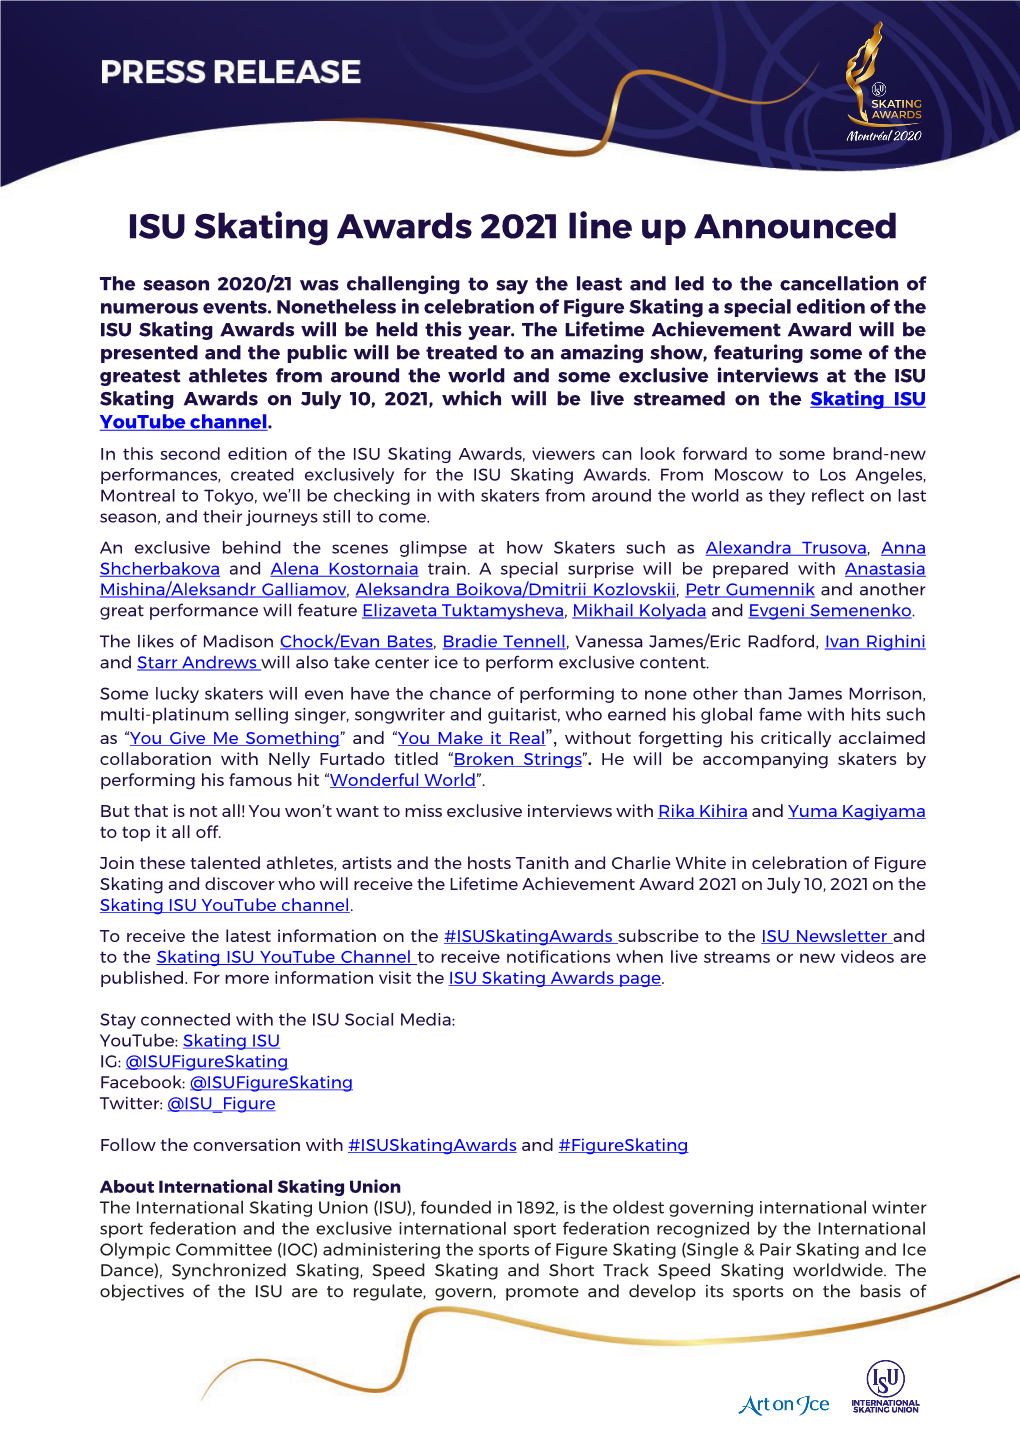 ISU Skating Awards 2021 Line up Announced